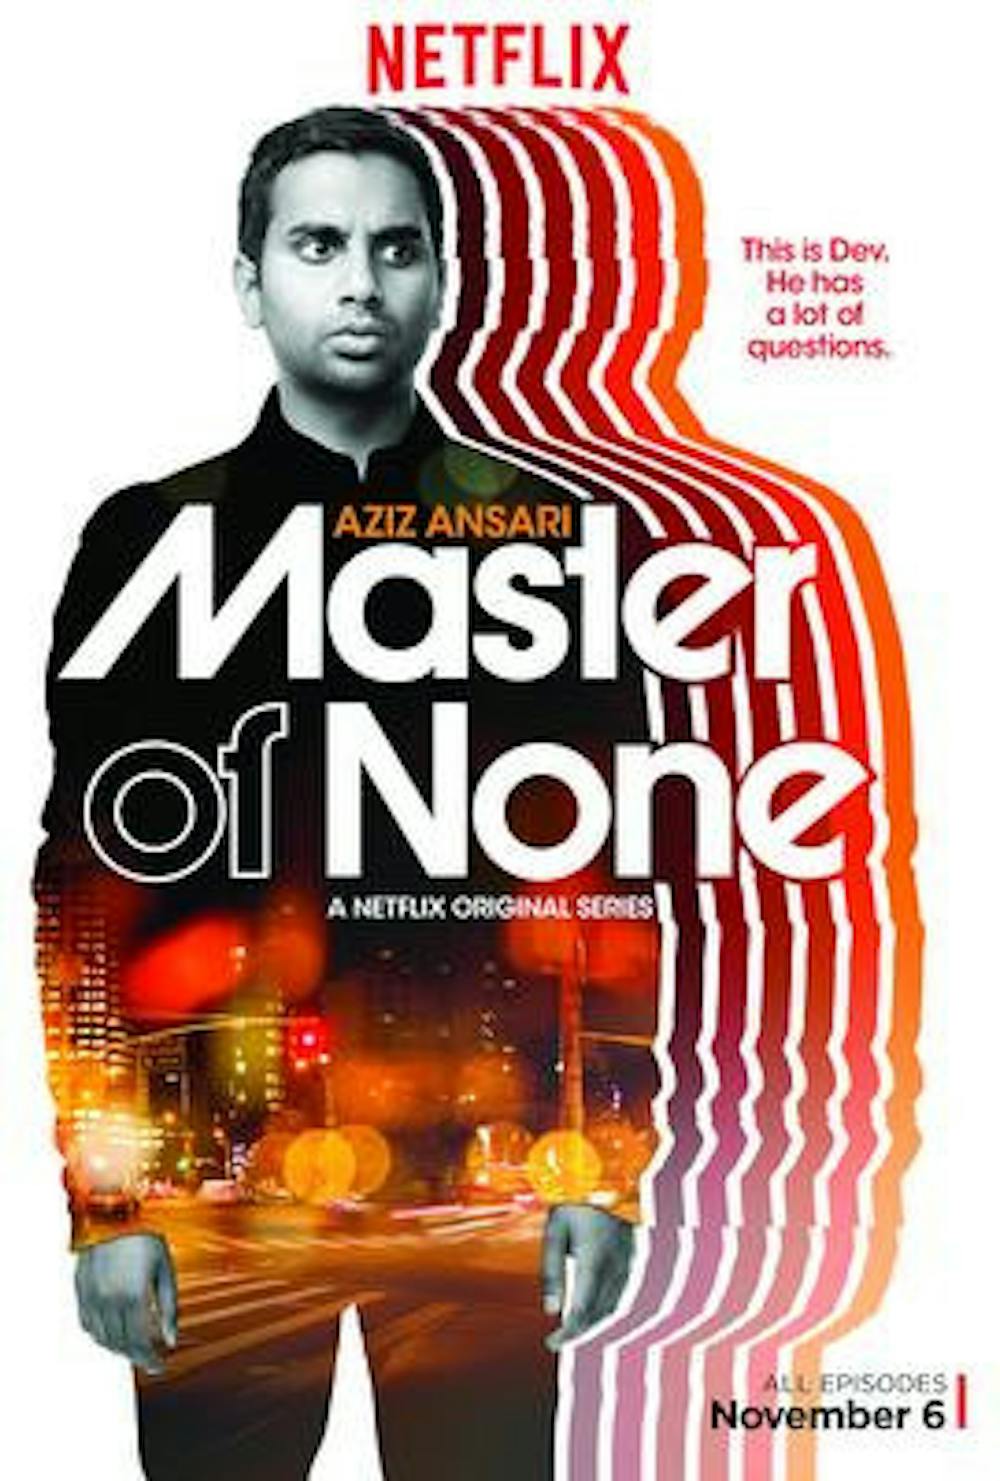 Aziz Ansari shines in the Netflix original series, "Master of None."